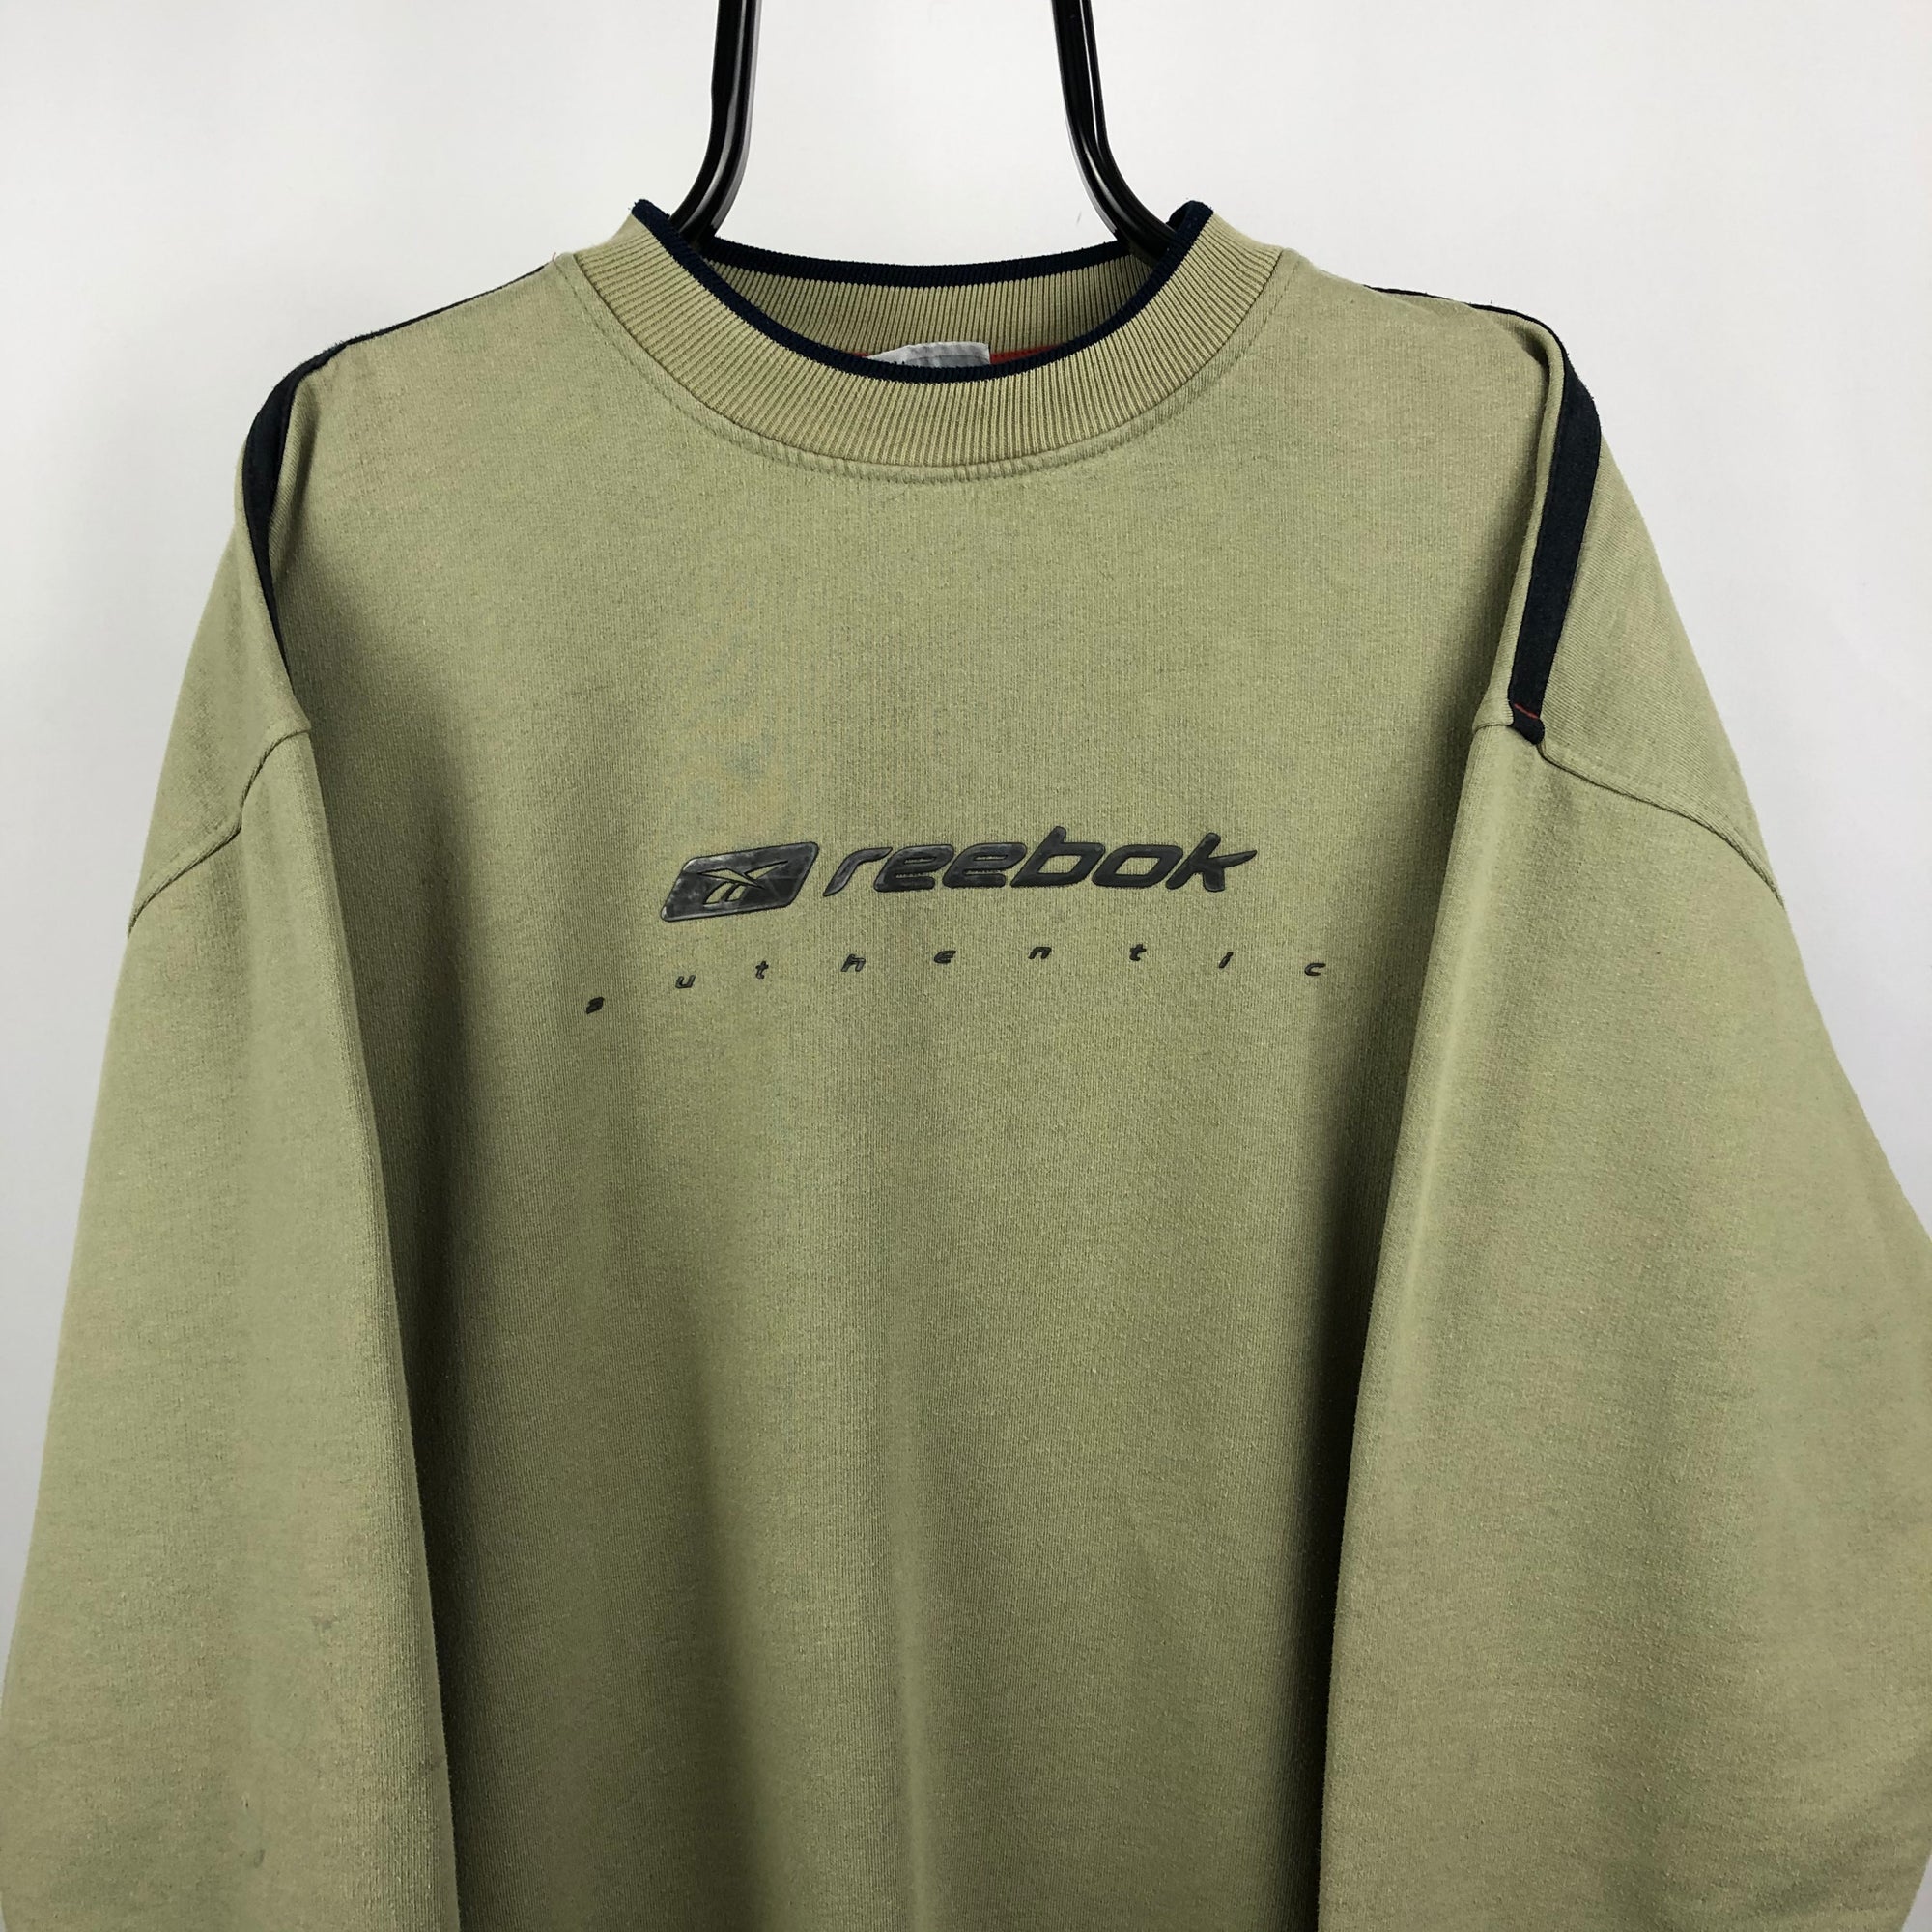 Vintage 90s Reebok Spellout Sweatshirt in Beige - Men's XL/Women's XXL